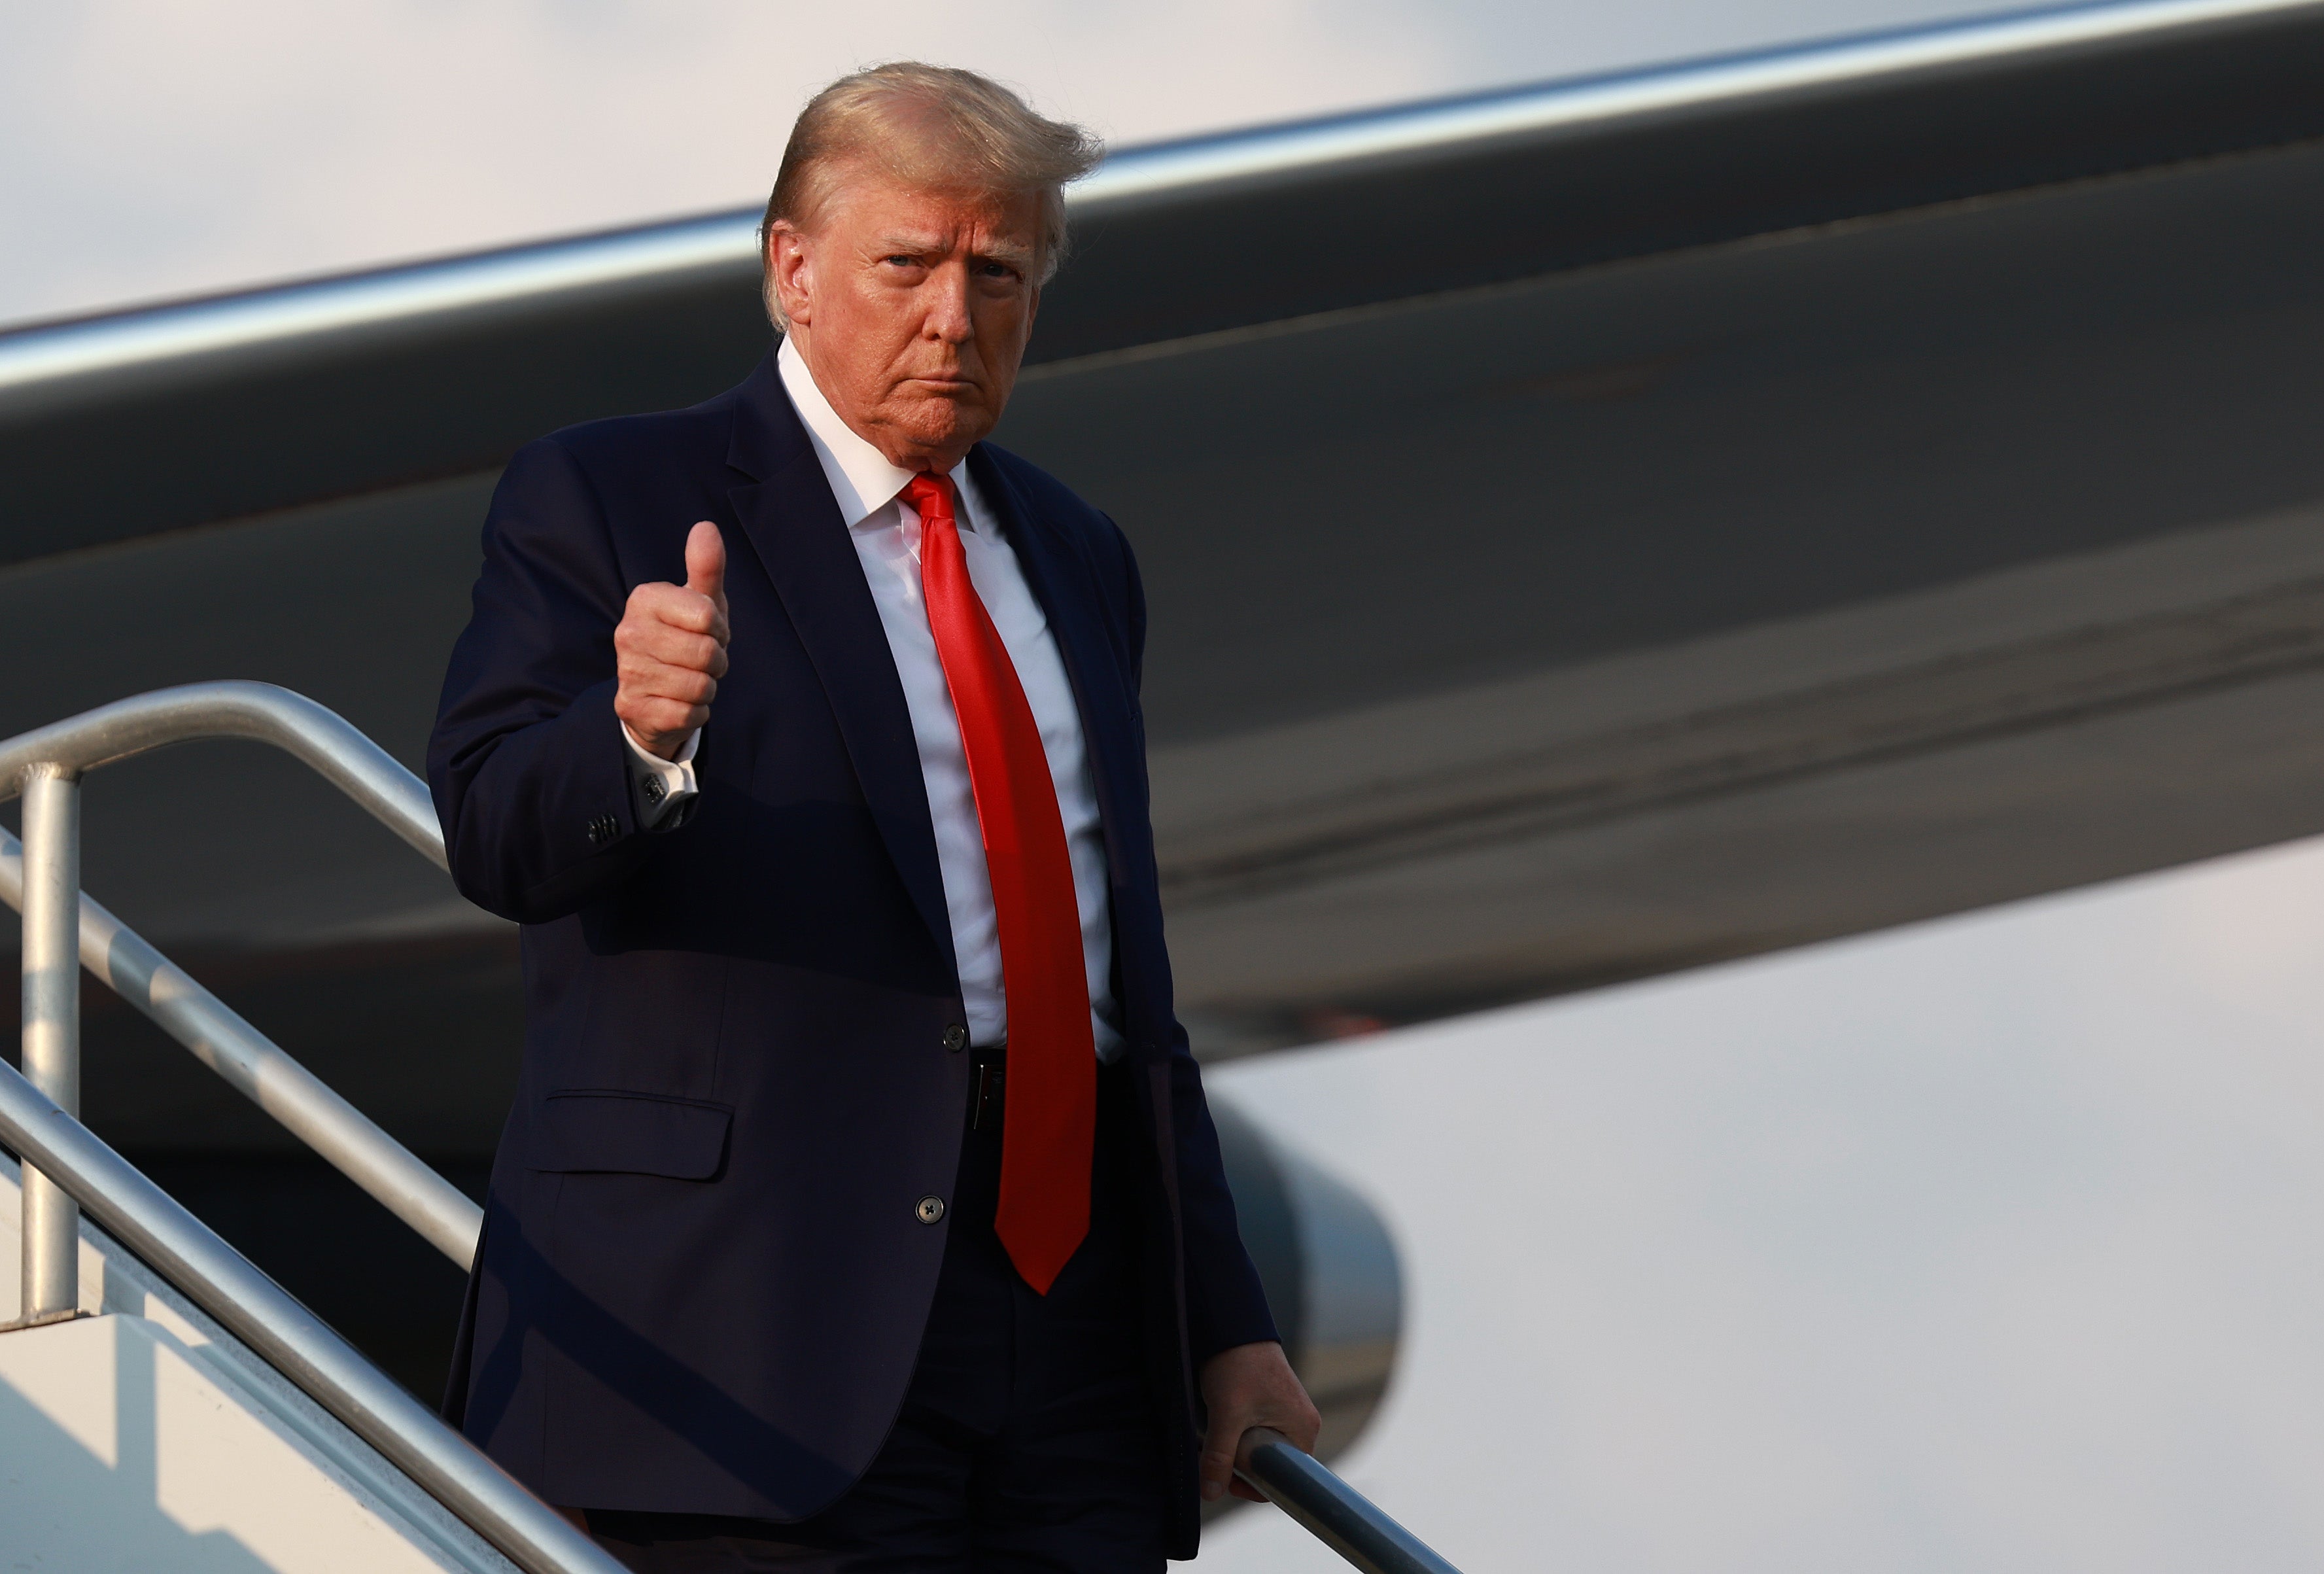 Former US president Donald Trump arrives at Atlanta Hartsfield-Jackson International Airport in Georgia